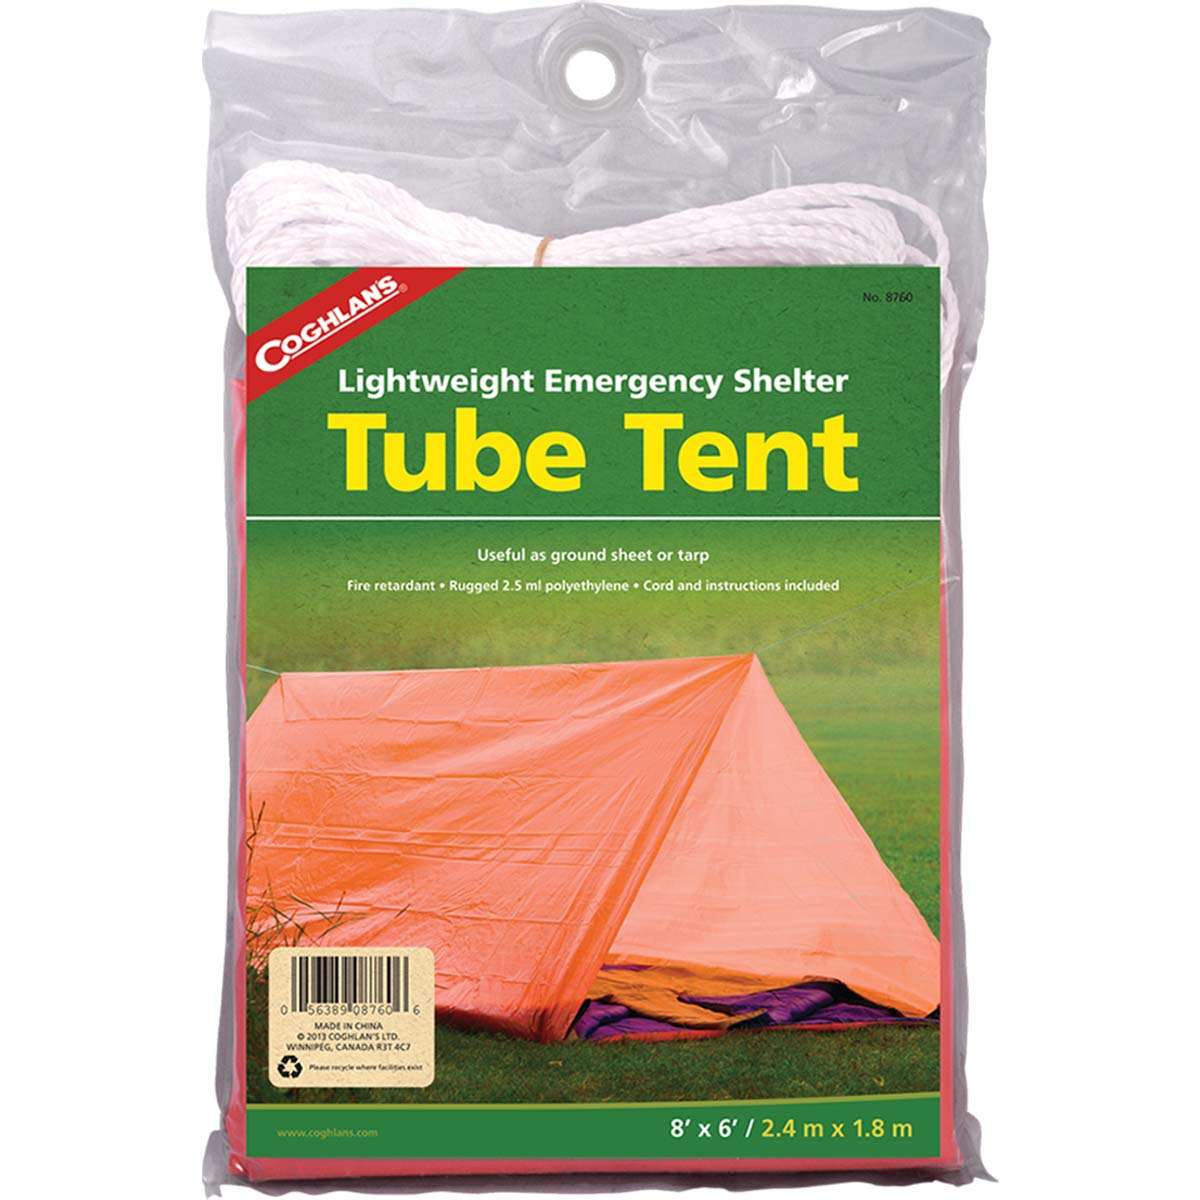 Coghlan's Emergency Tube Tent